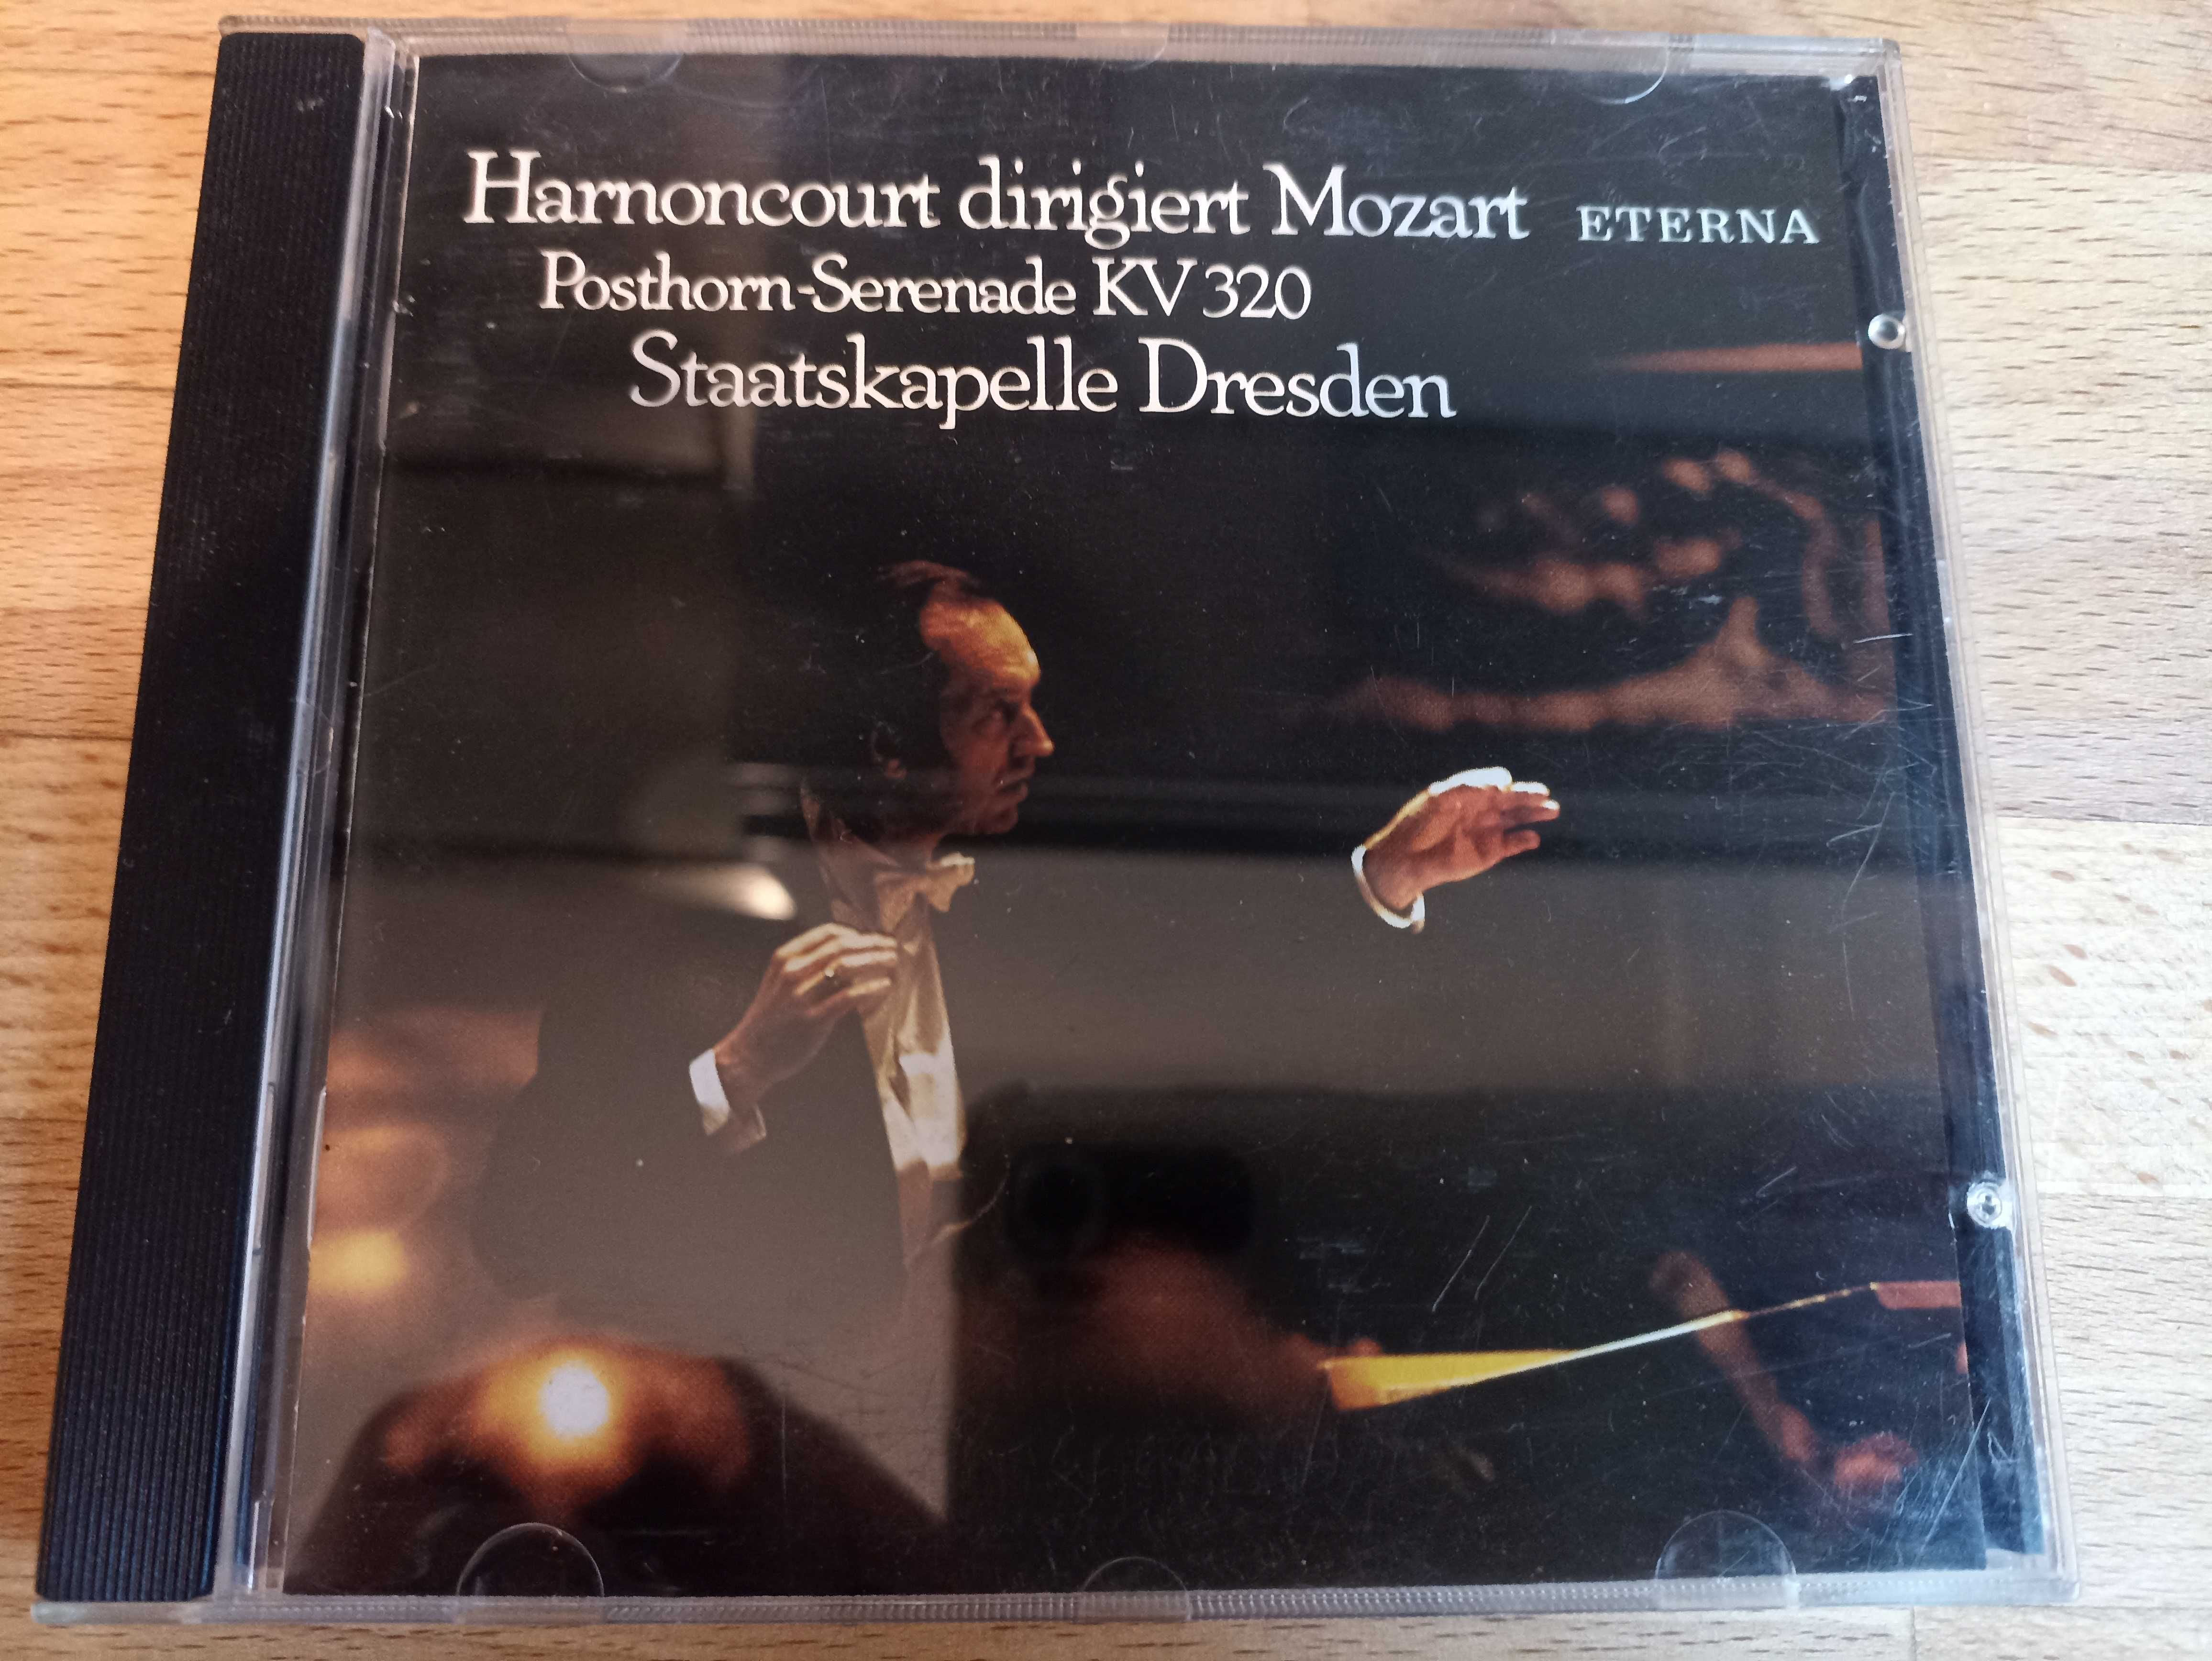 Harnoncourt Dirigent Mozart Dresden, płyta CD